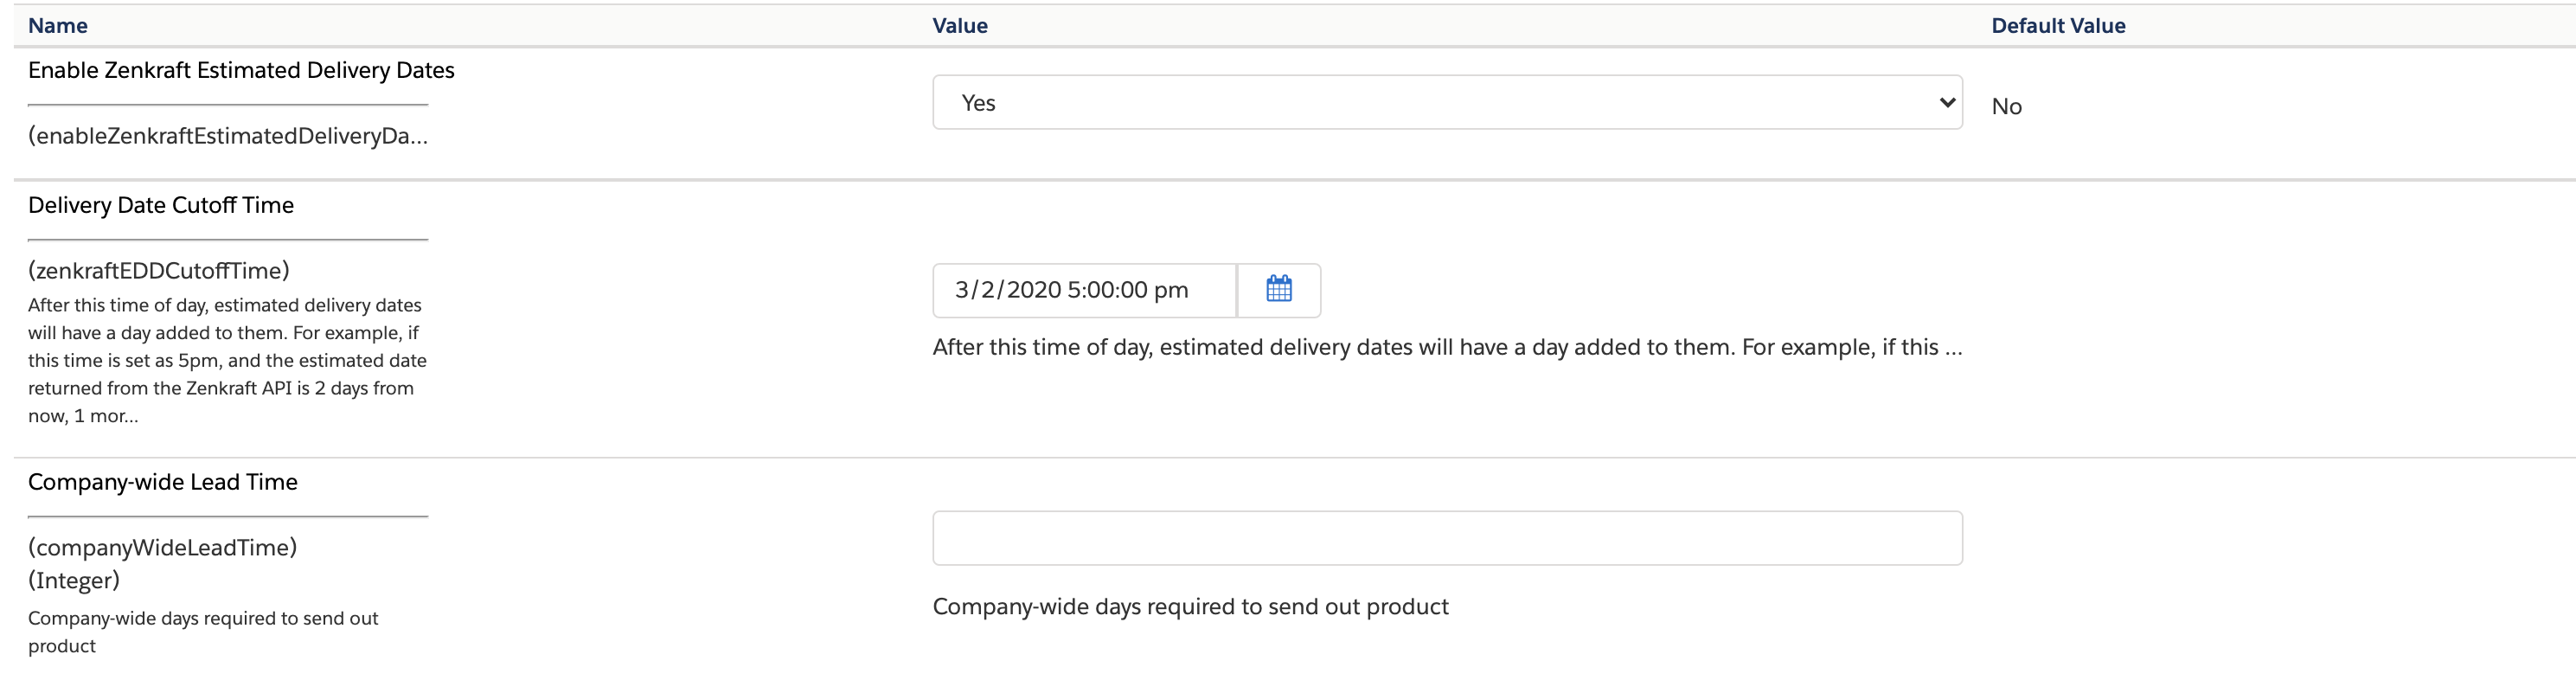 B2C Commerce Estimated Delivery Dates Docs